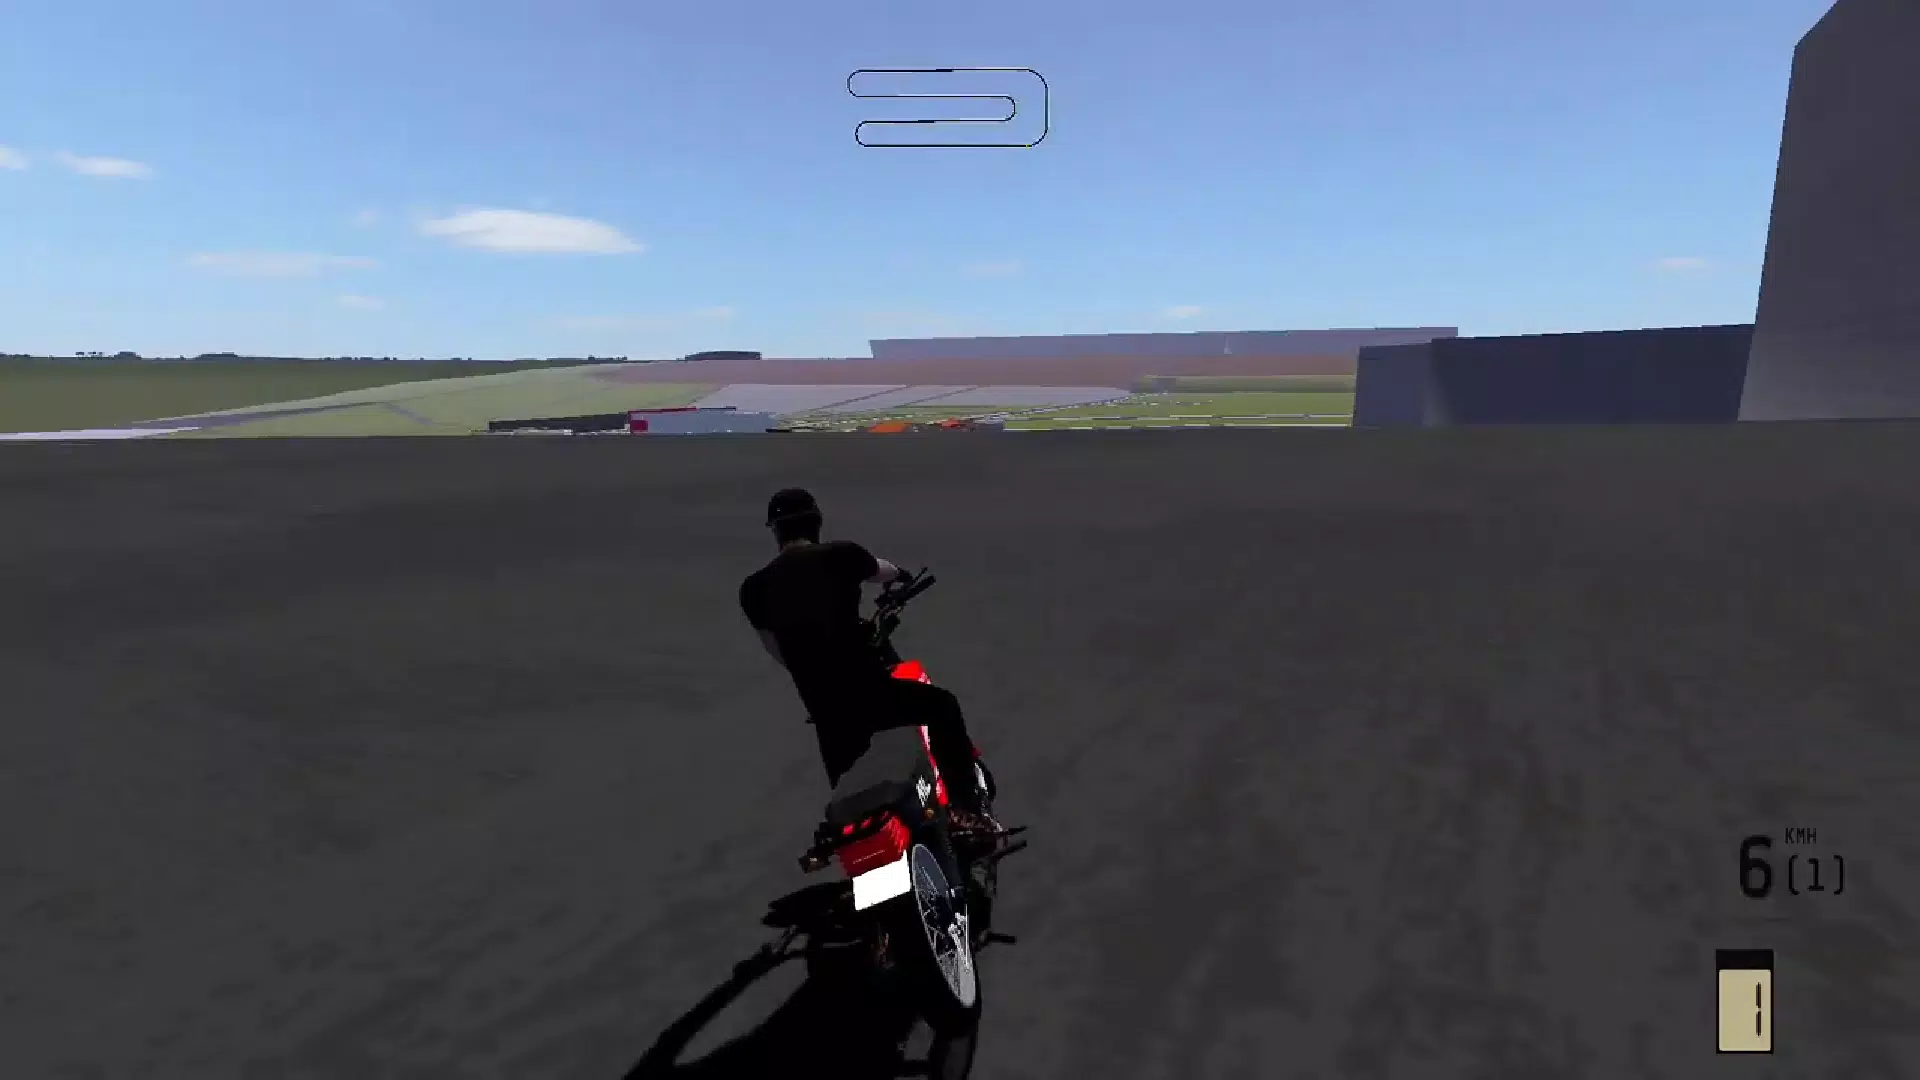 Como baixar Mx stunt bike grau simulator no Android